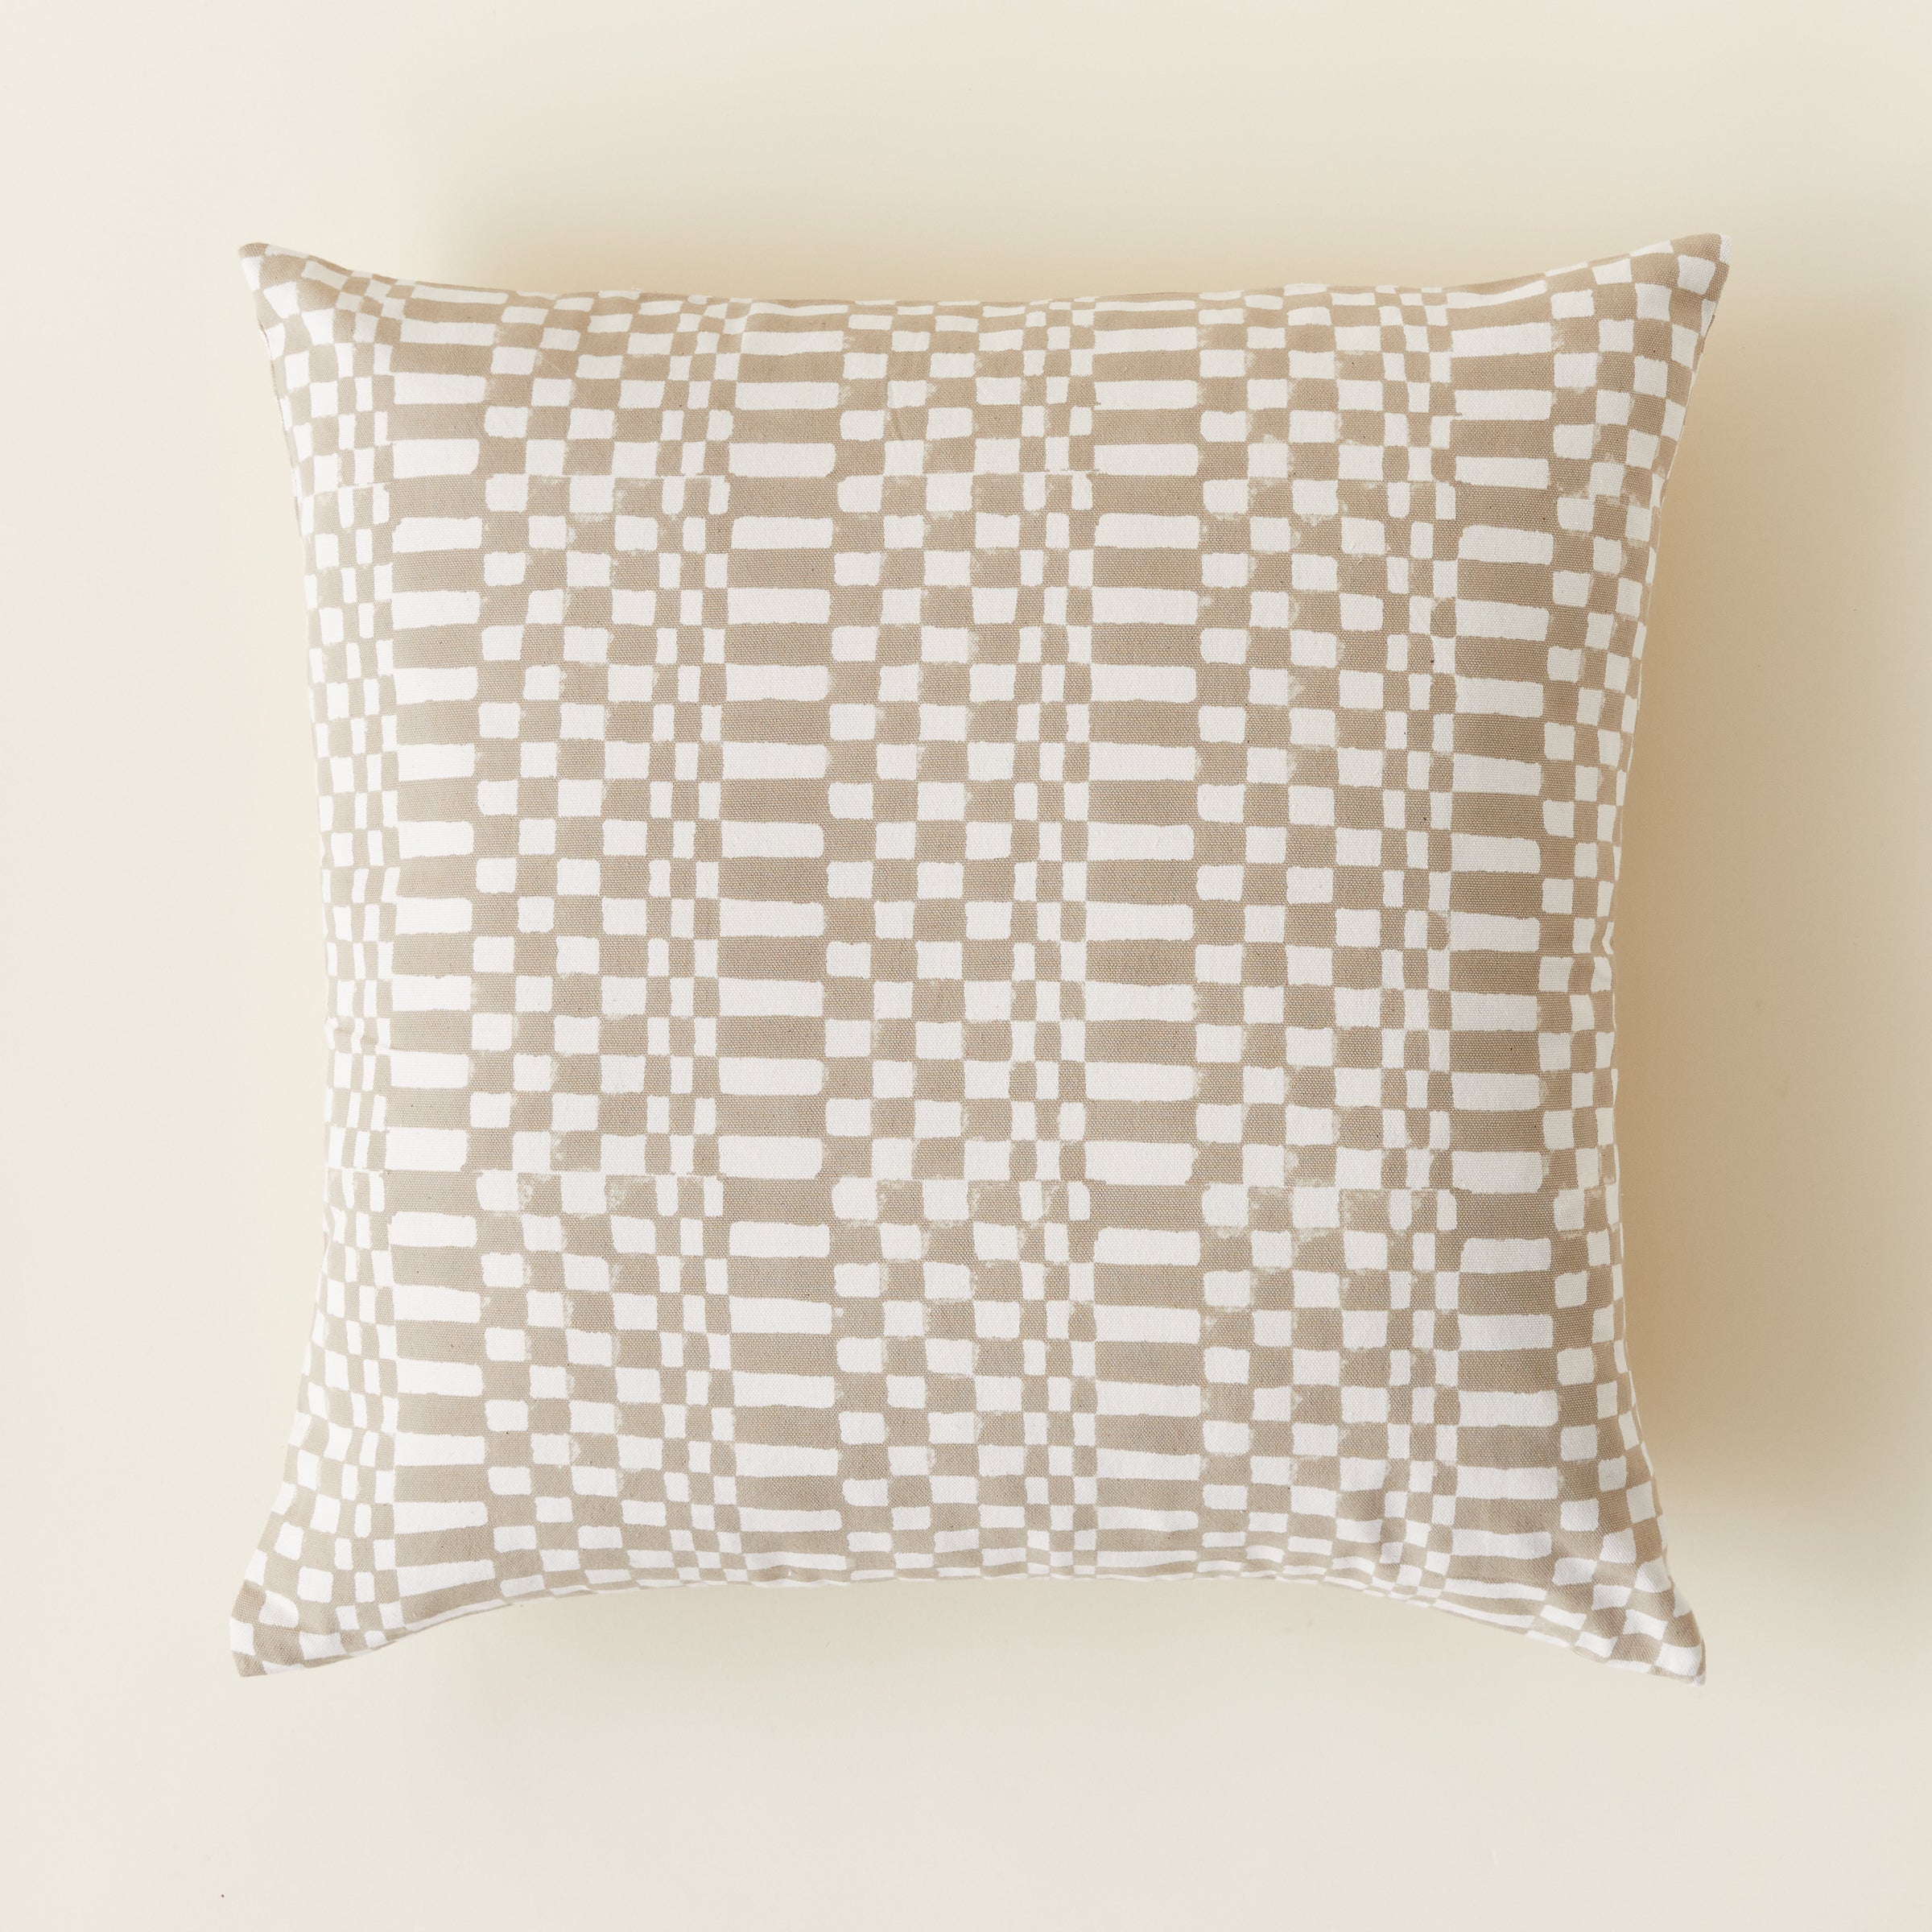 KMH x Ginger Sparrow -  Checkered Pillow Cover  2